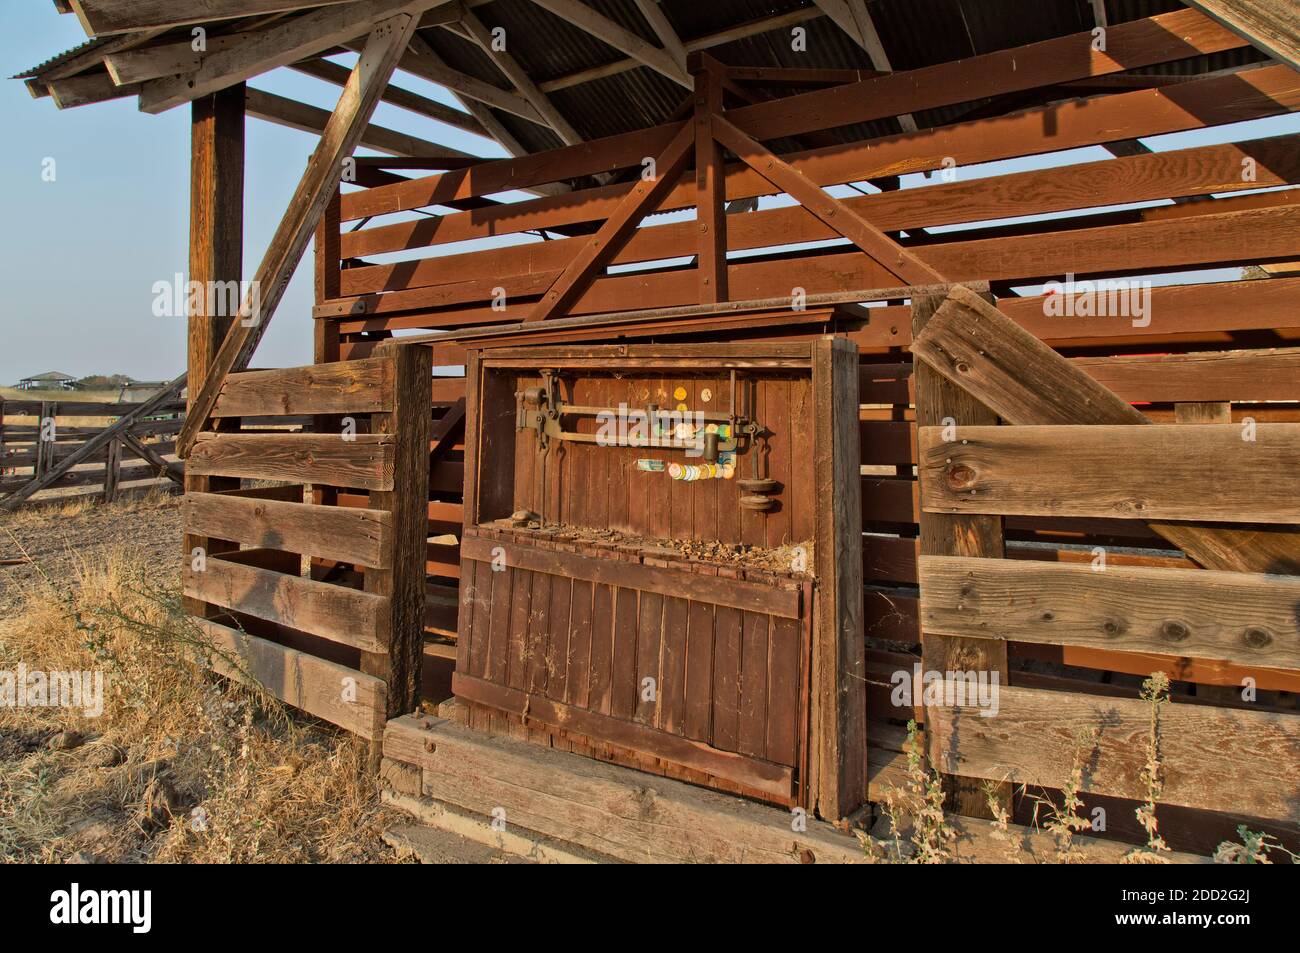 Bestiame antiquato "in terra" Scalehouse in rovina, certificazione Weights & Measures Seals 1959 - 2001. Attrezzature agricole storiche abbandonate. Foto Stock